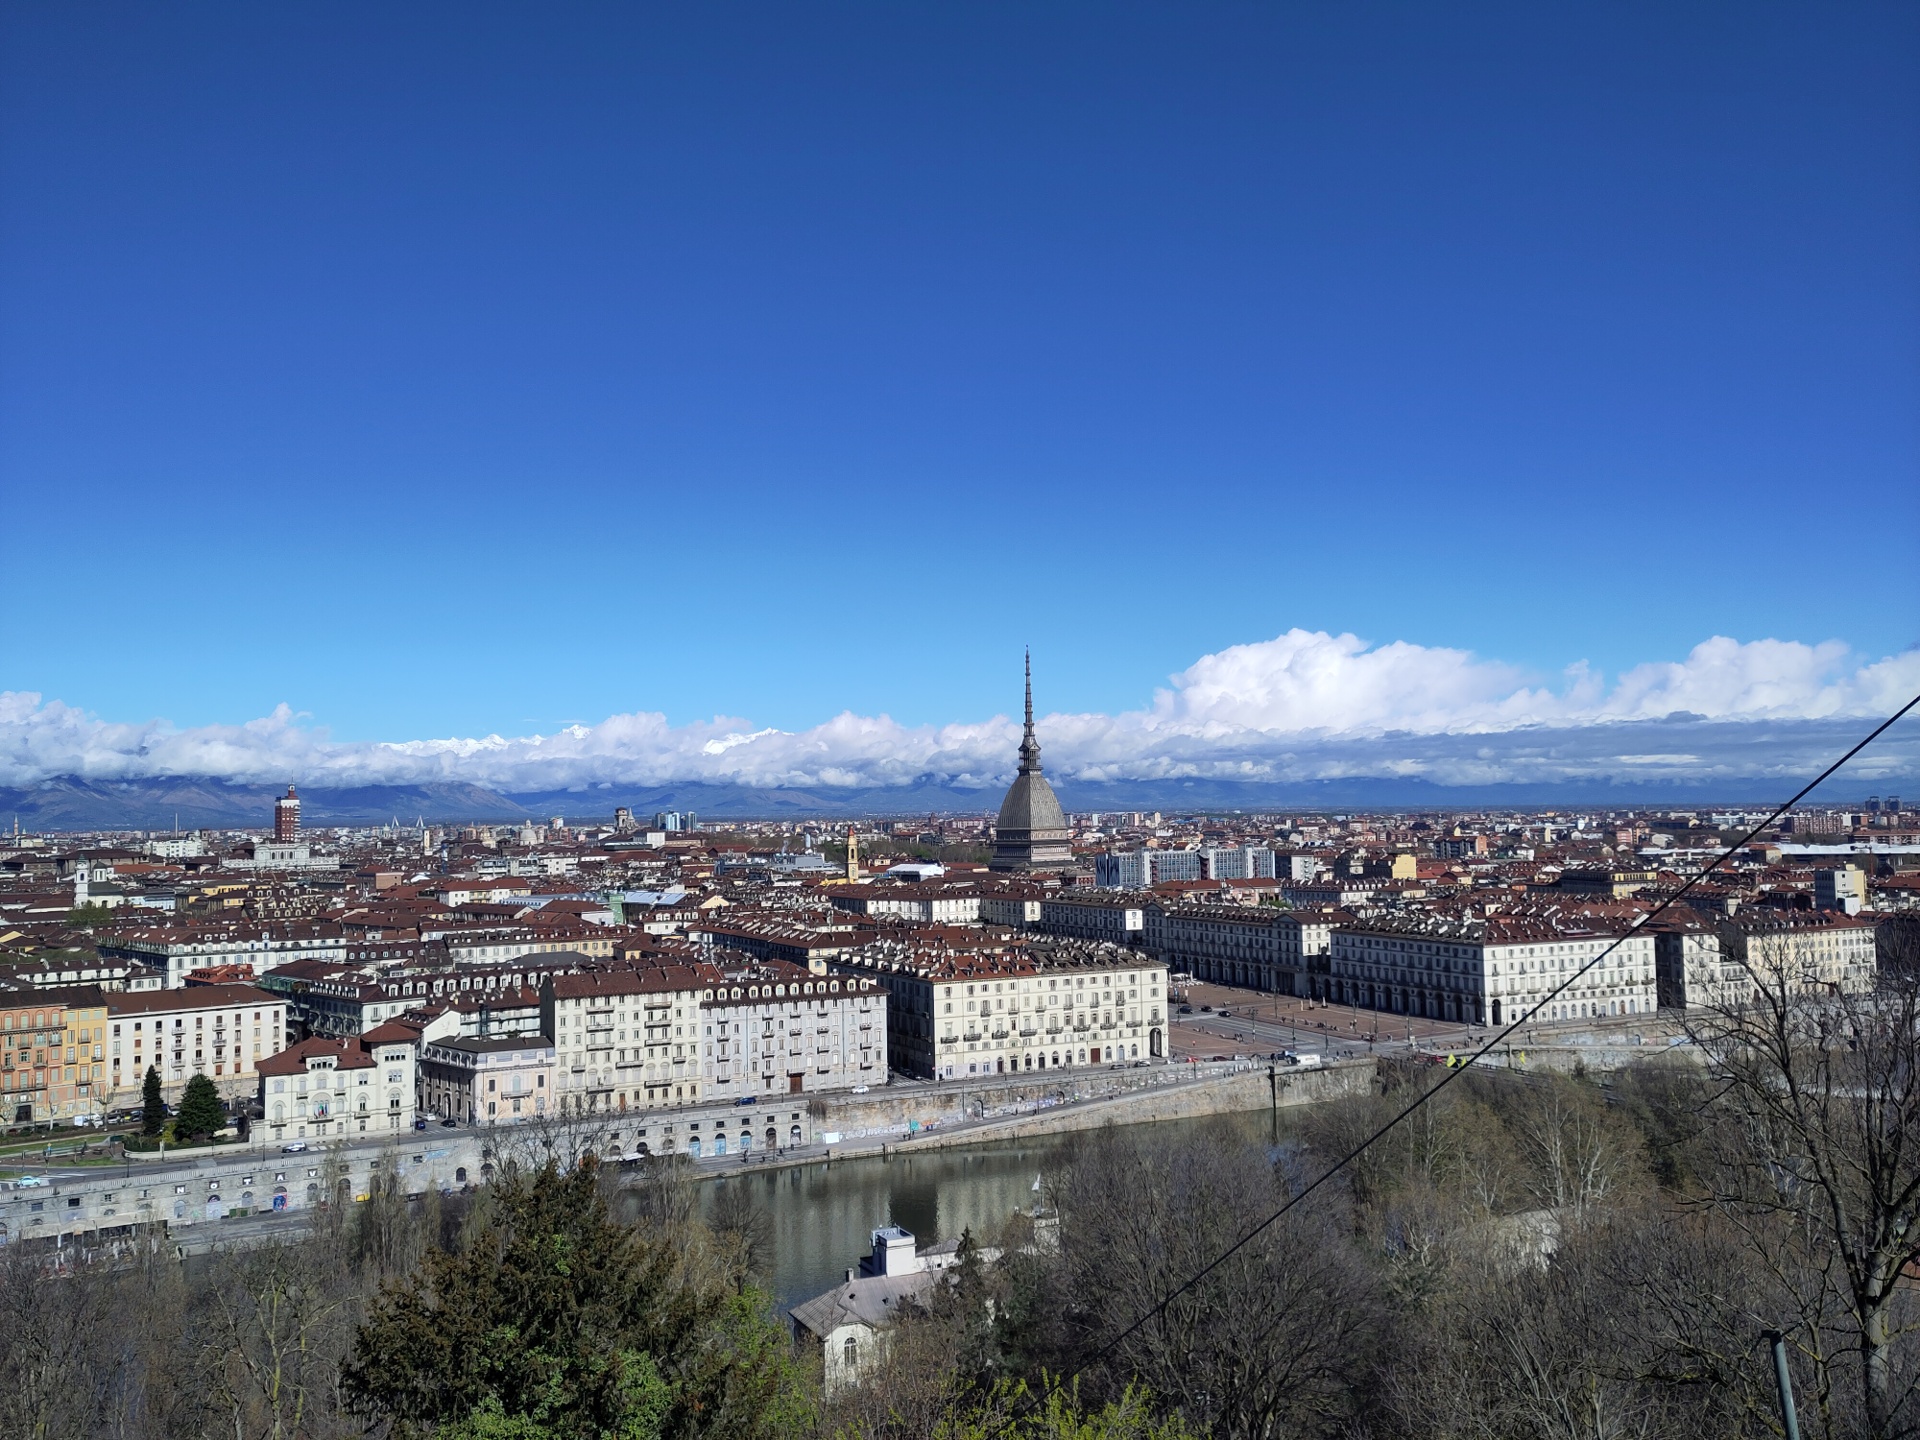 A view of sunny Torino, with the Mole Antonelliana protruding.